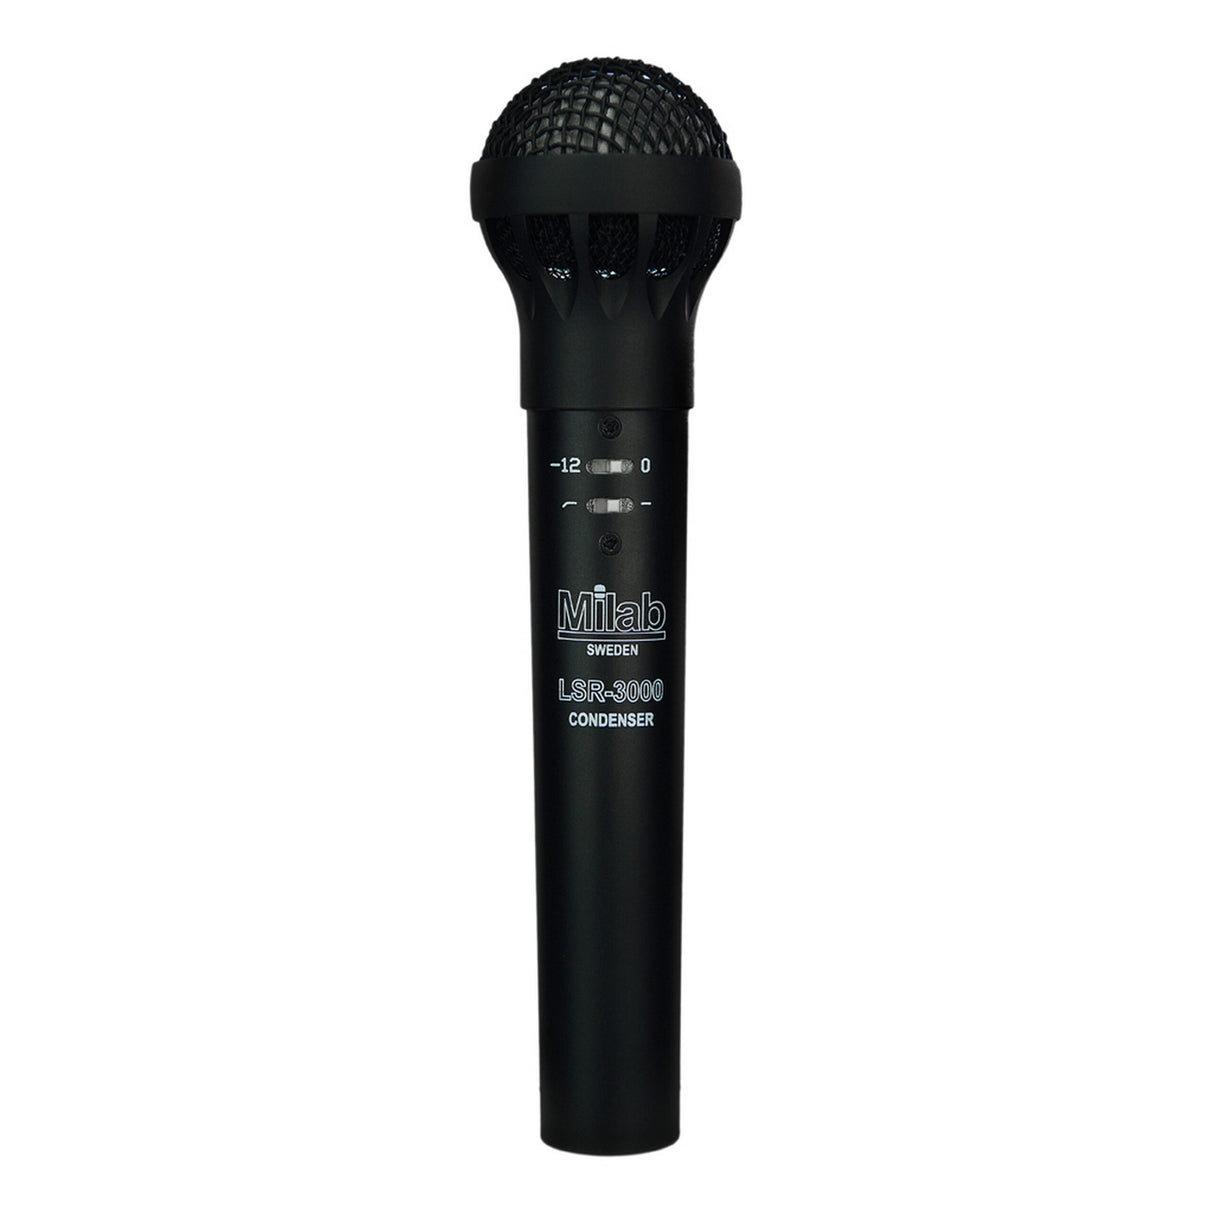 Milab LSR-3000 Handheld Condenser Microphone, Black